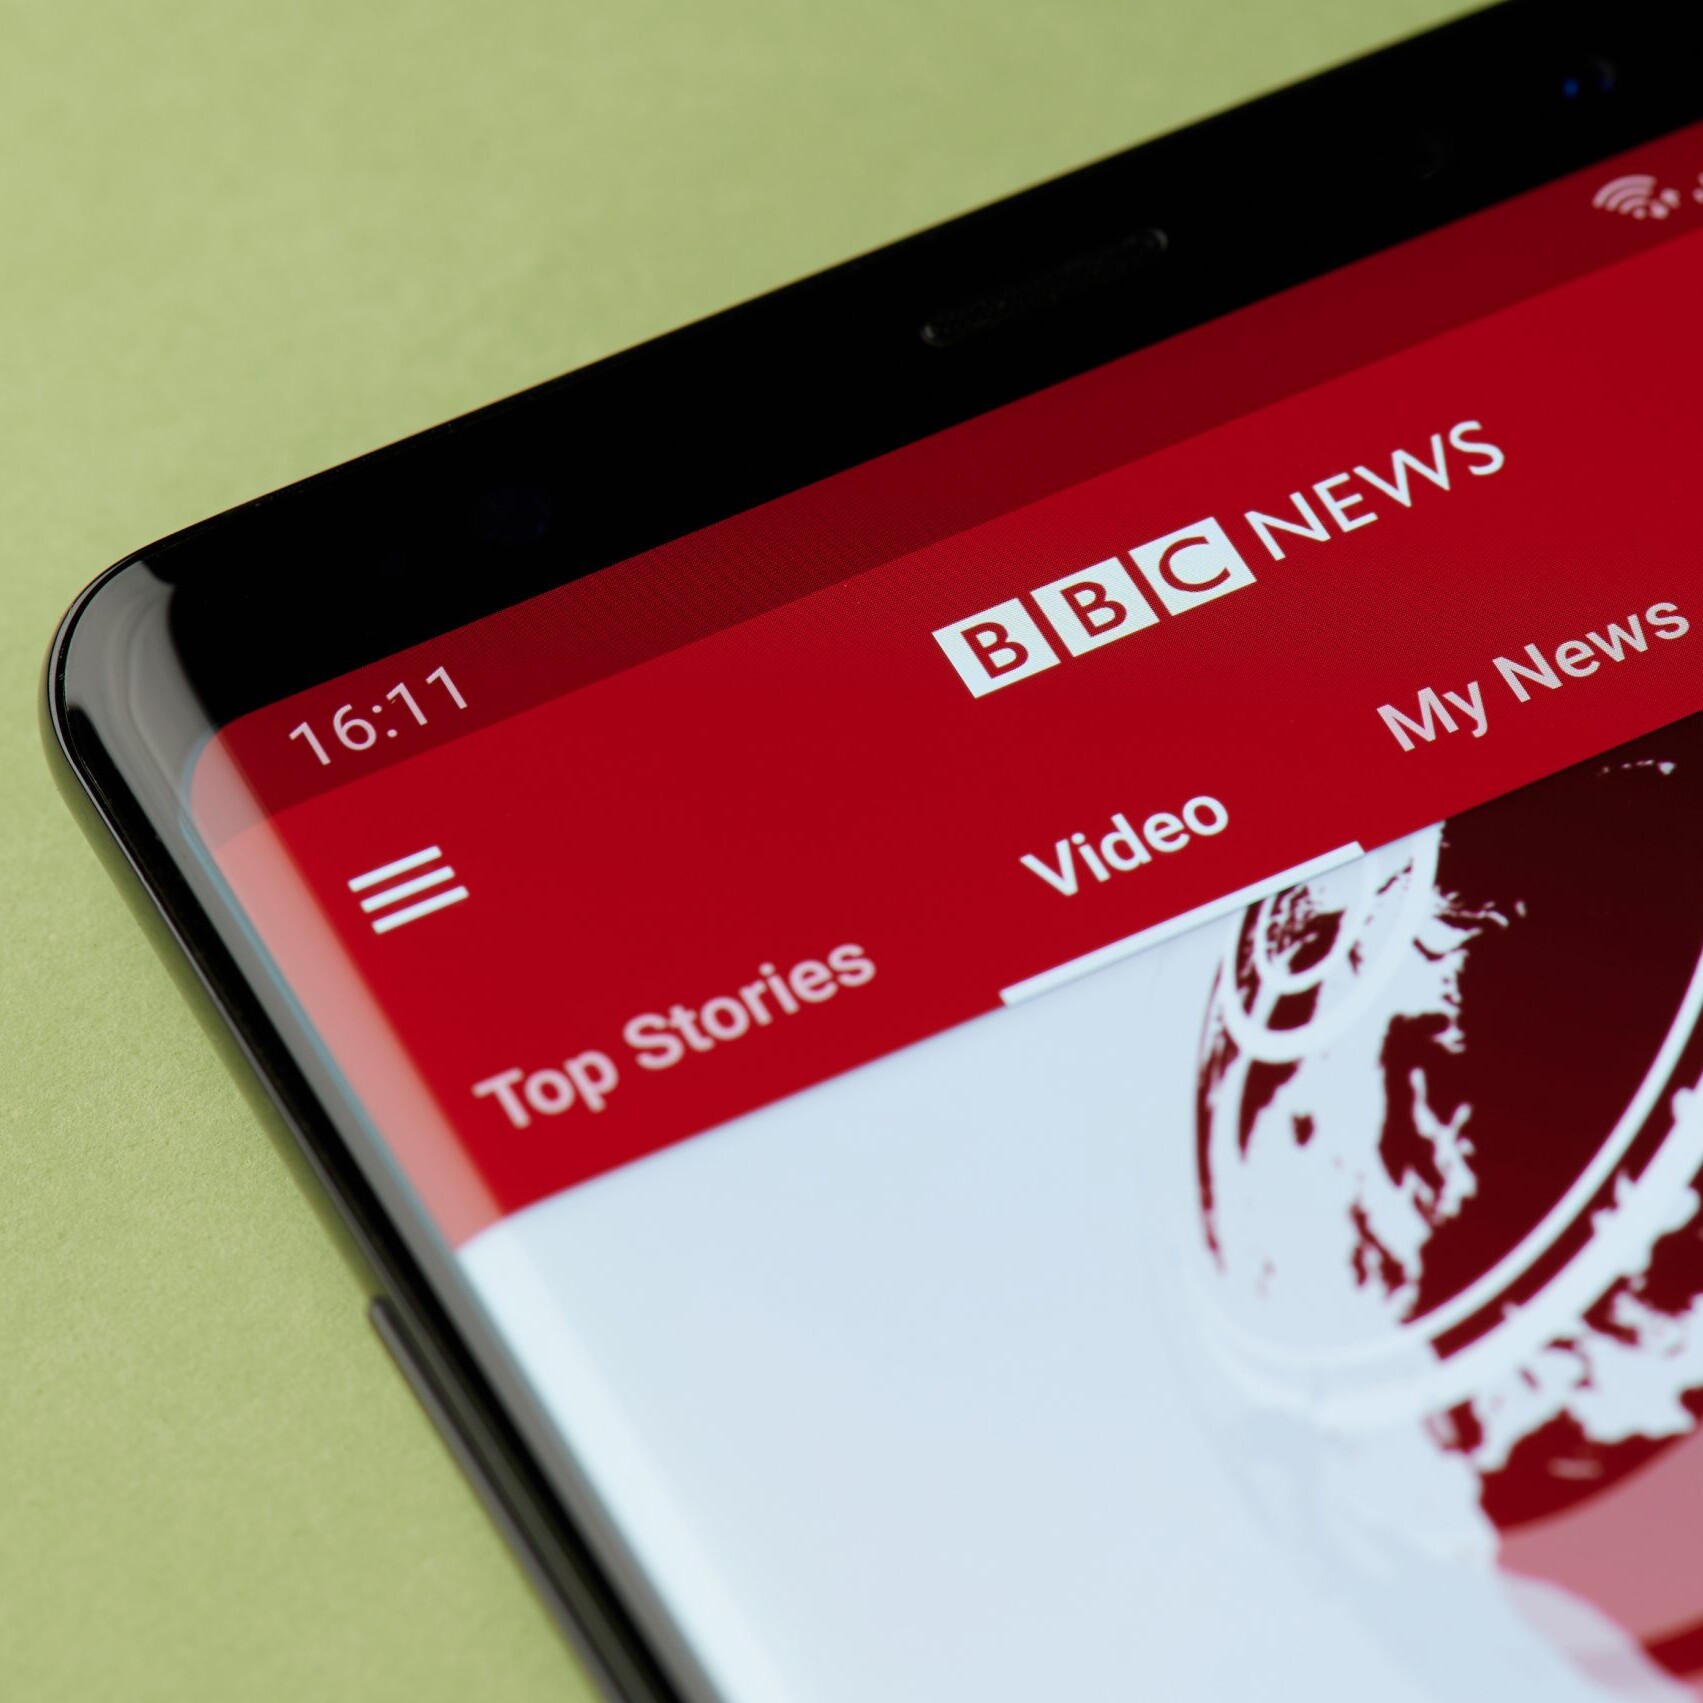 BBC News mobile app interface